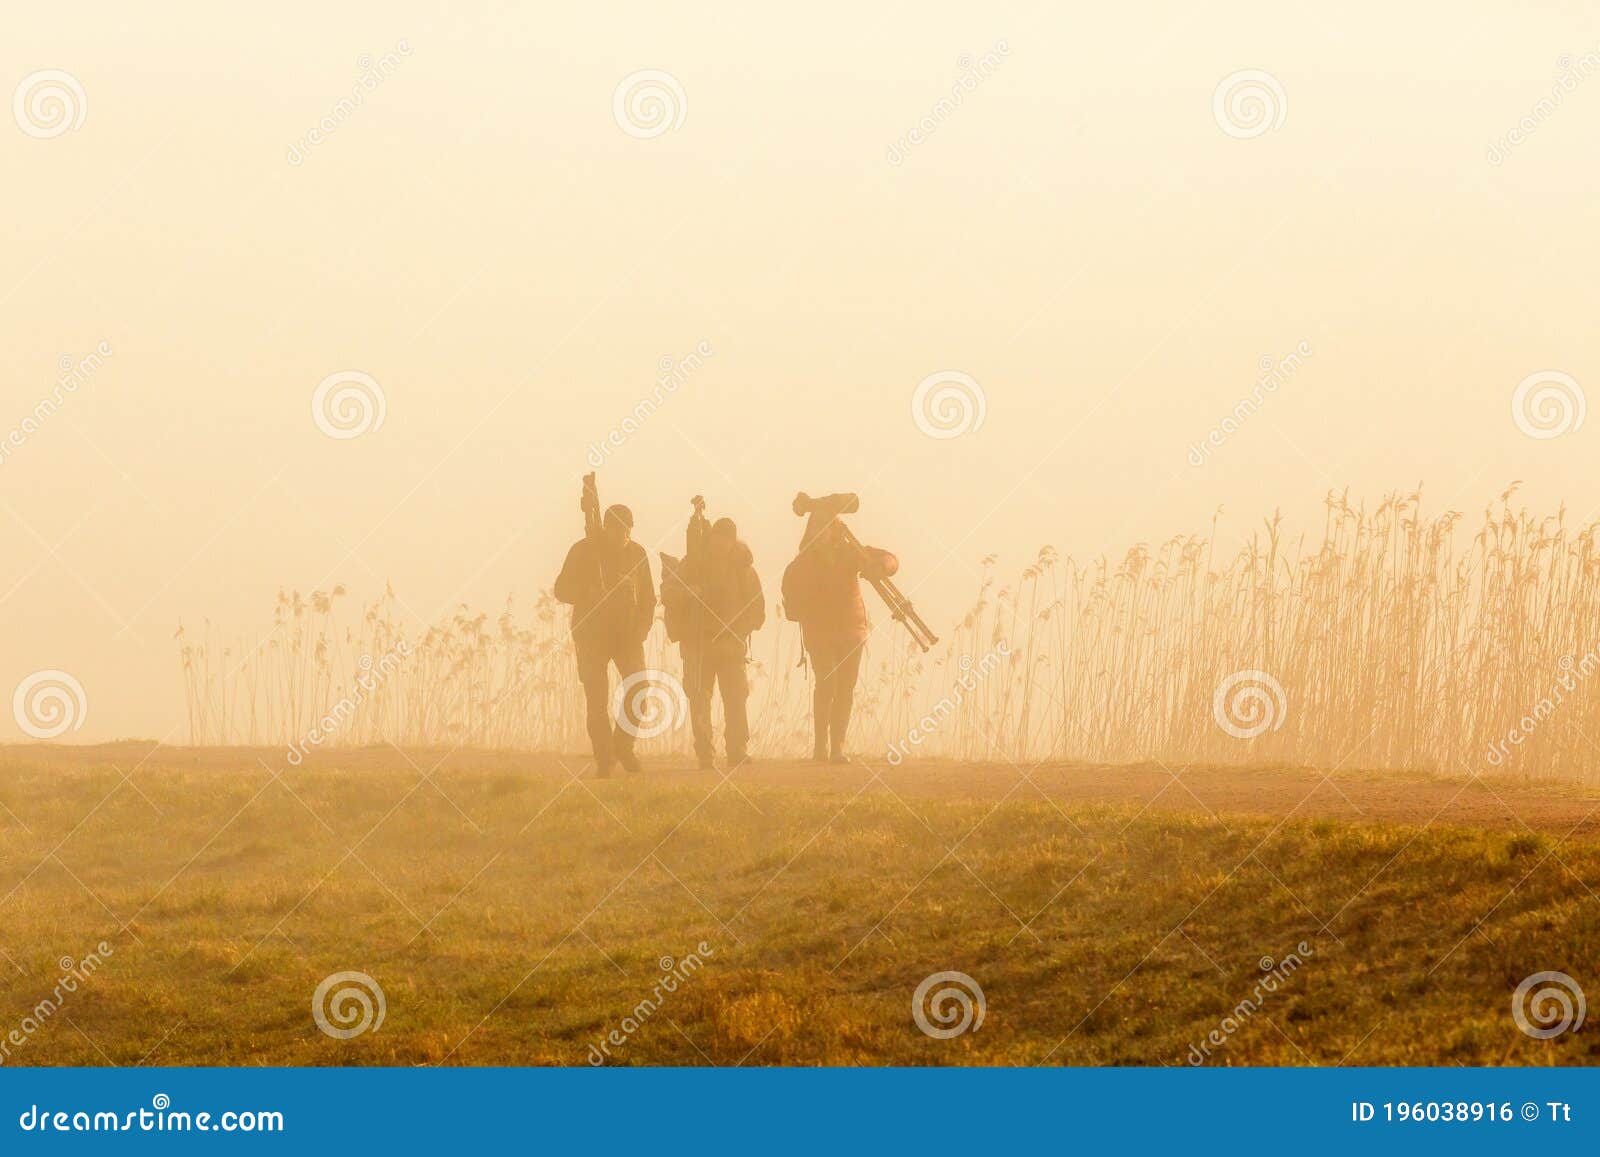 birdwatchers walking in the fog an early morning